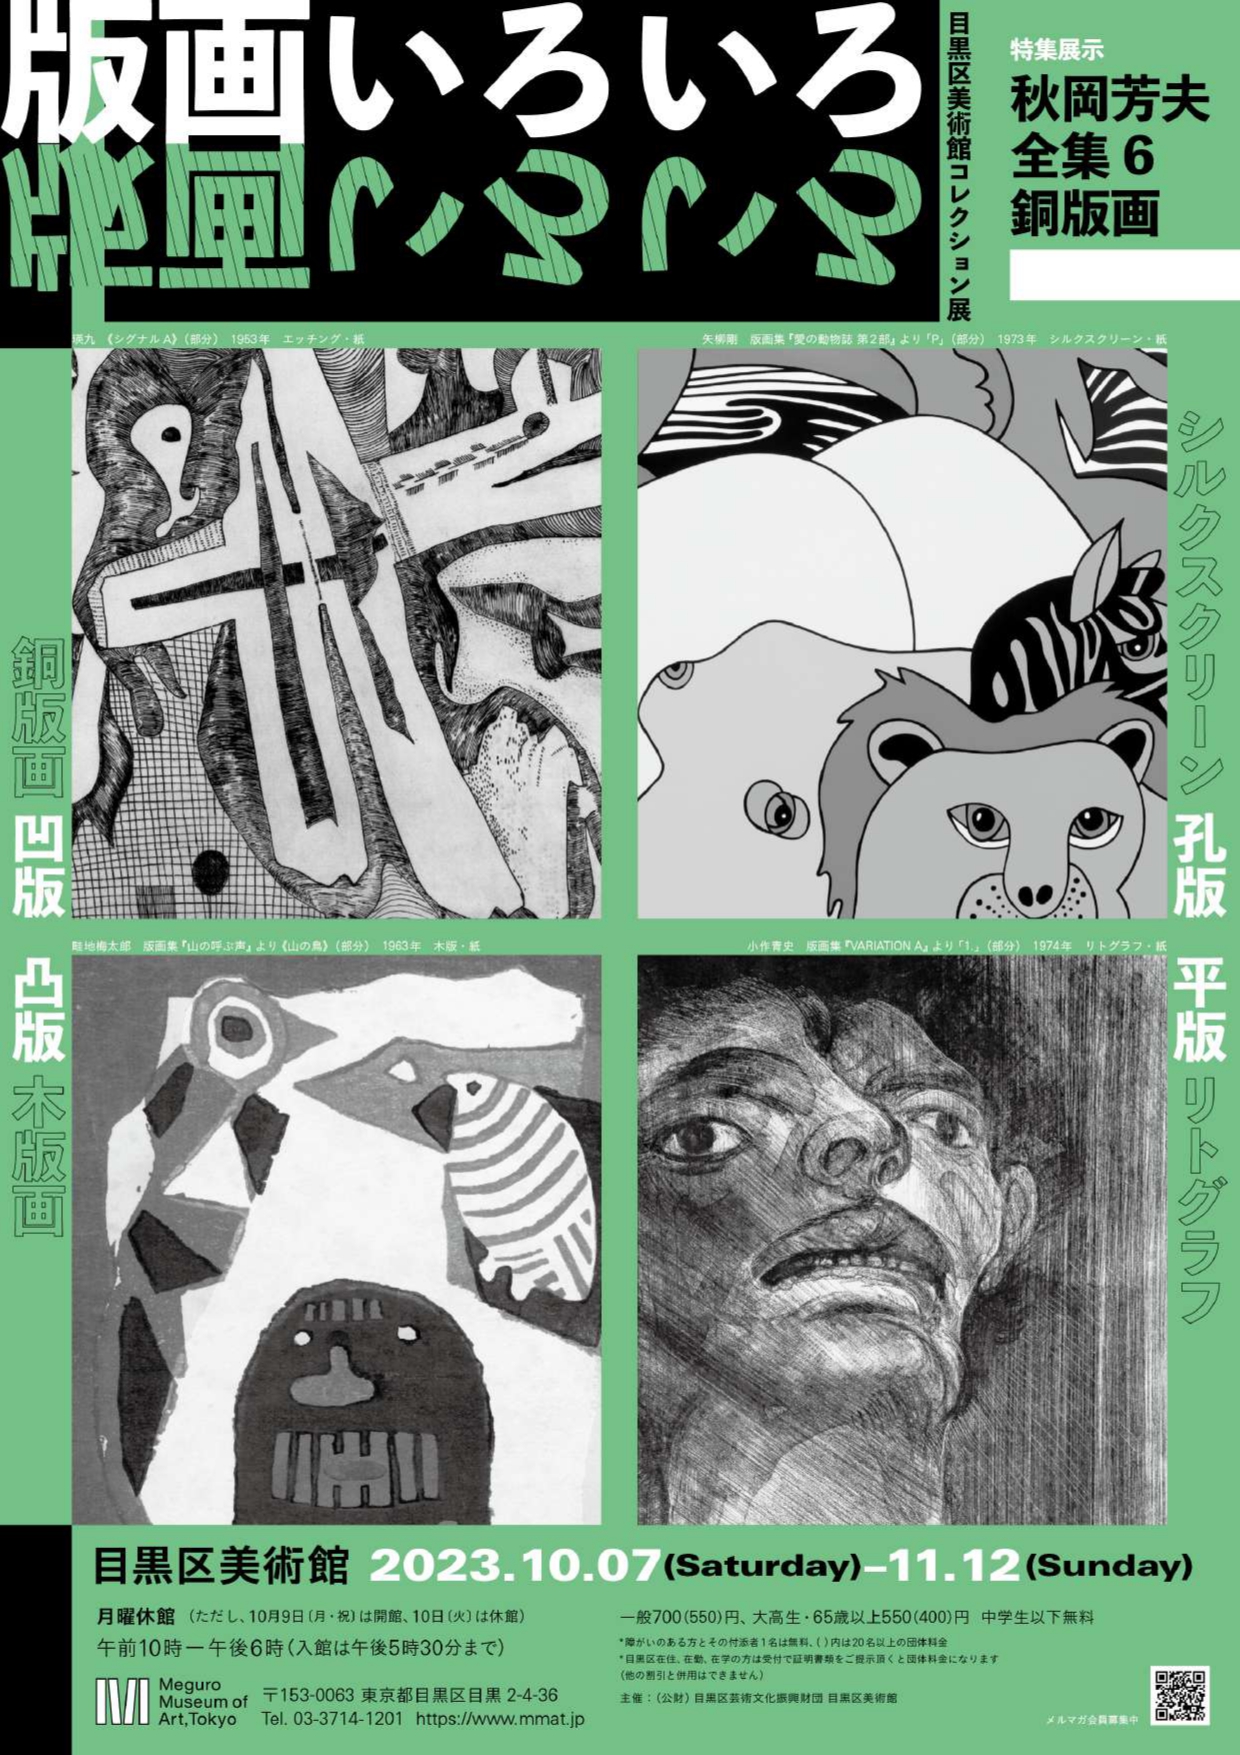 MMAT Collection Diverse Printworks + Complete Works of AKIOKA Yoshio, Vol.6